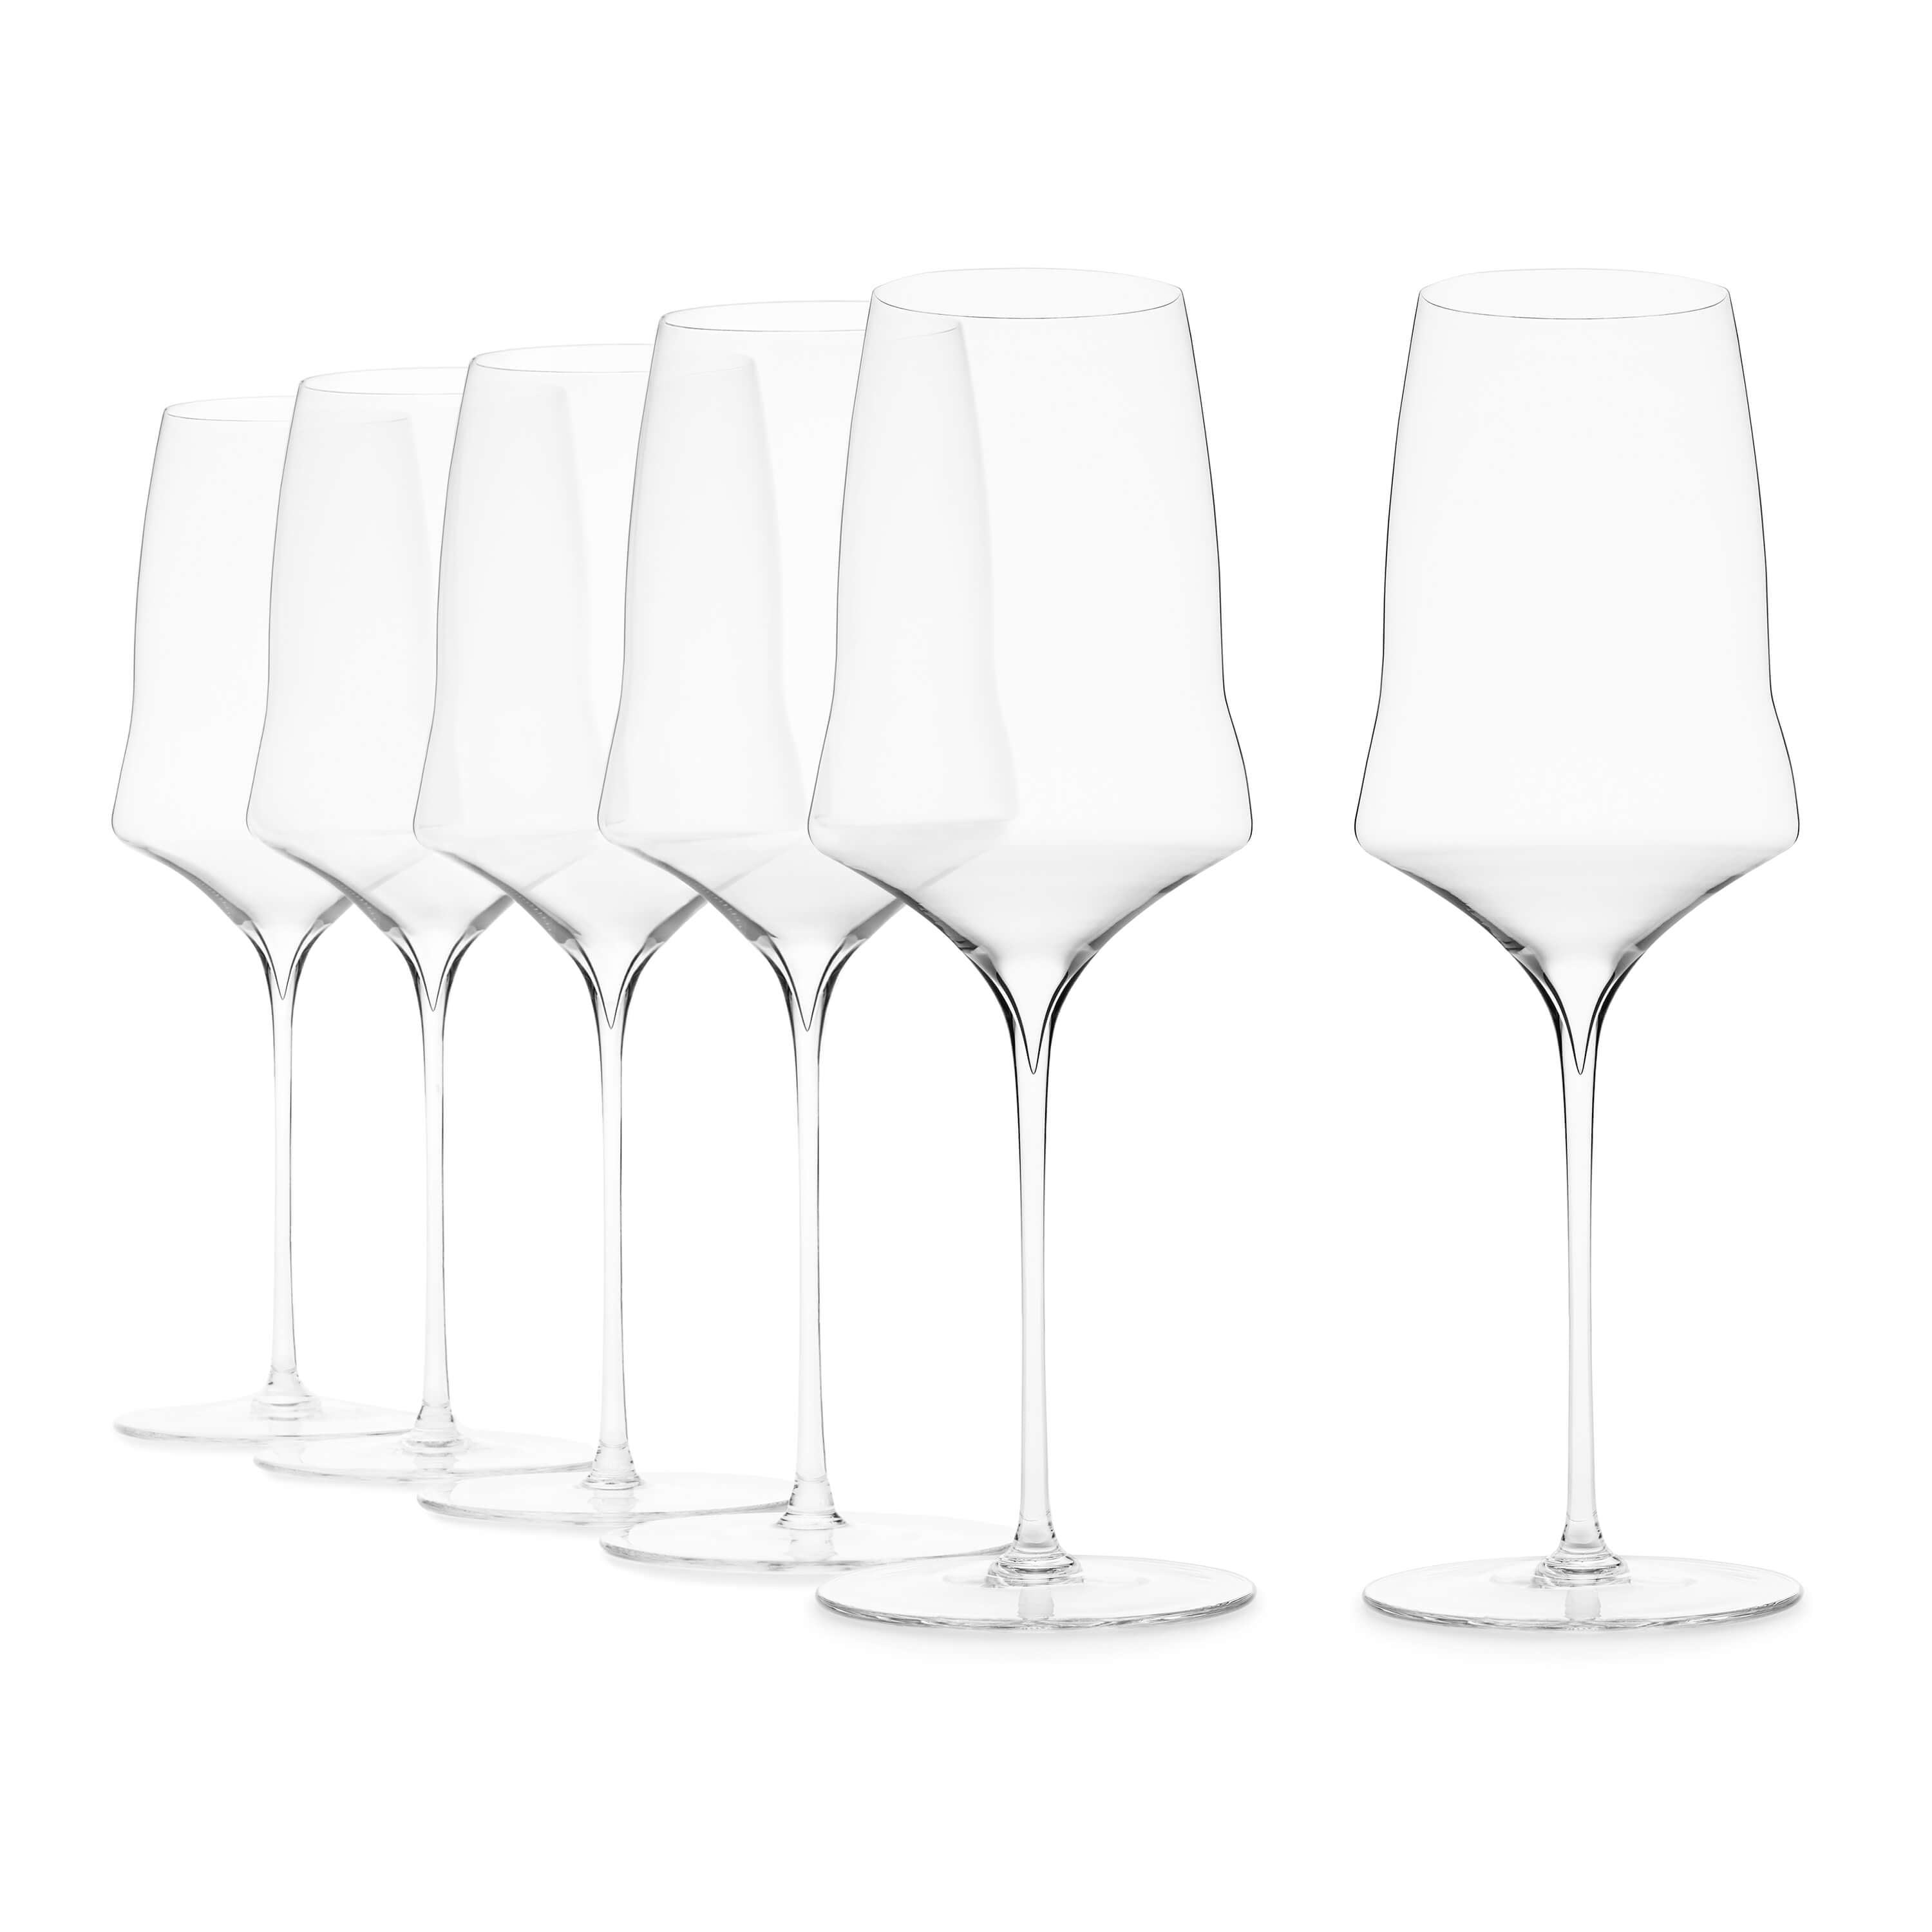 JOSEPHINE No 1 by Josephinenhütte – White wine glasses #Set_Set of 6